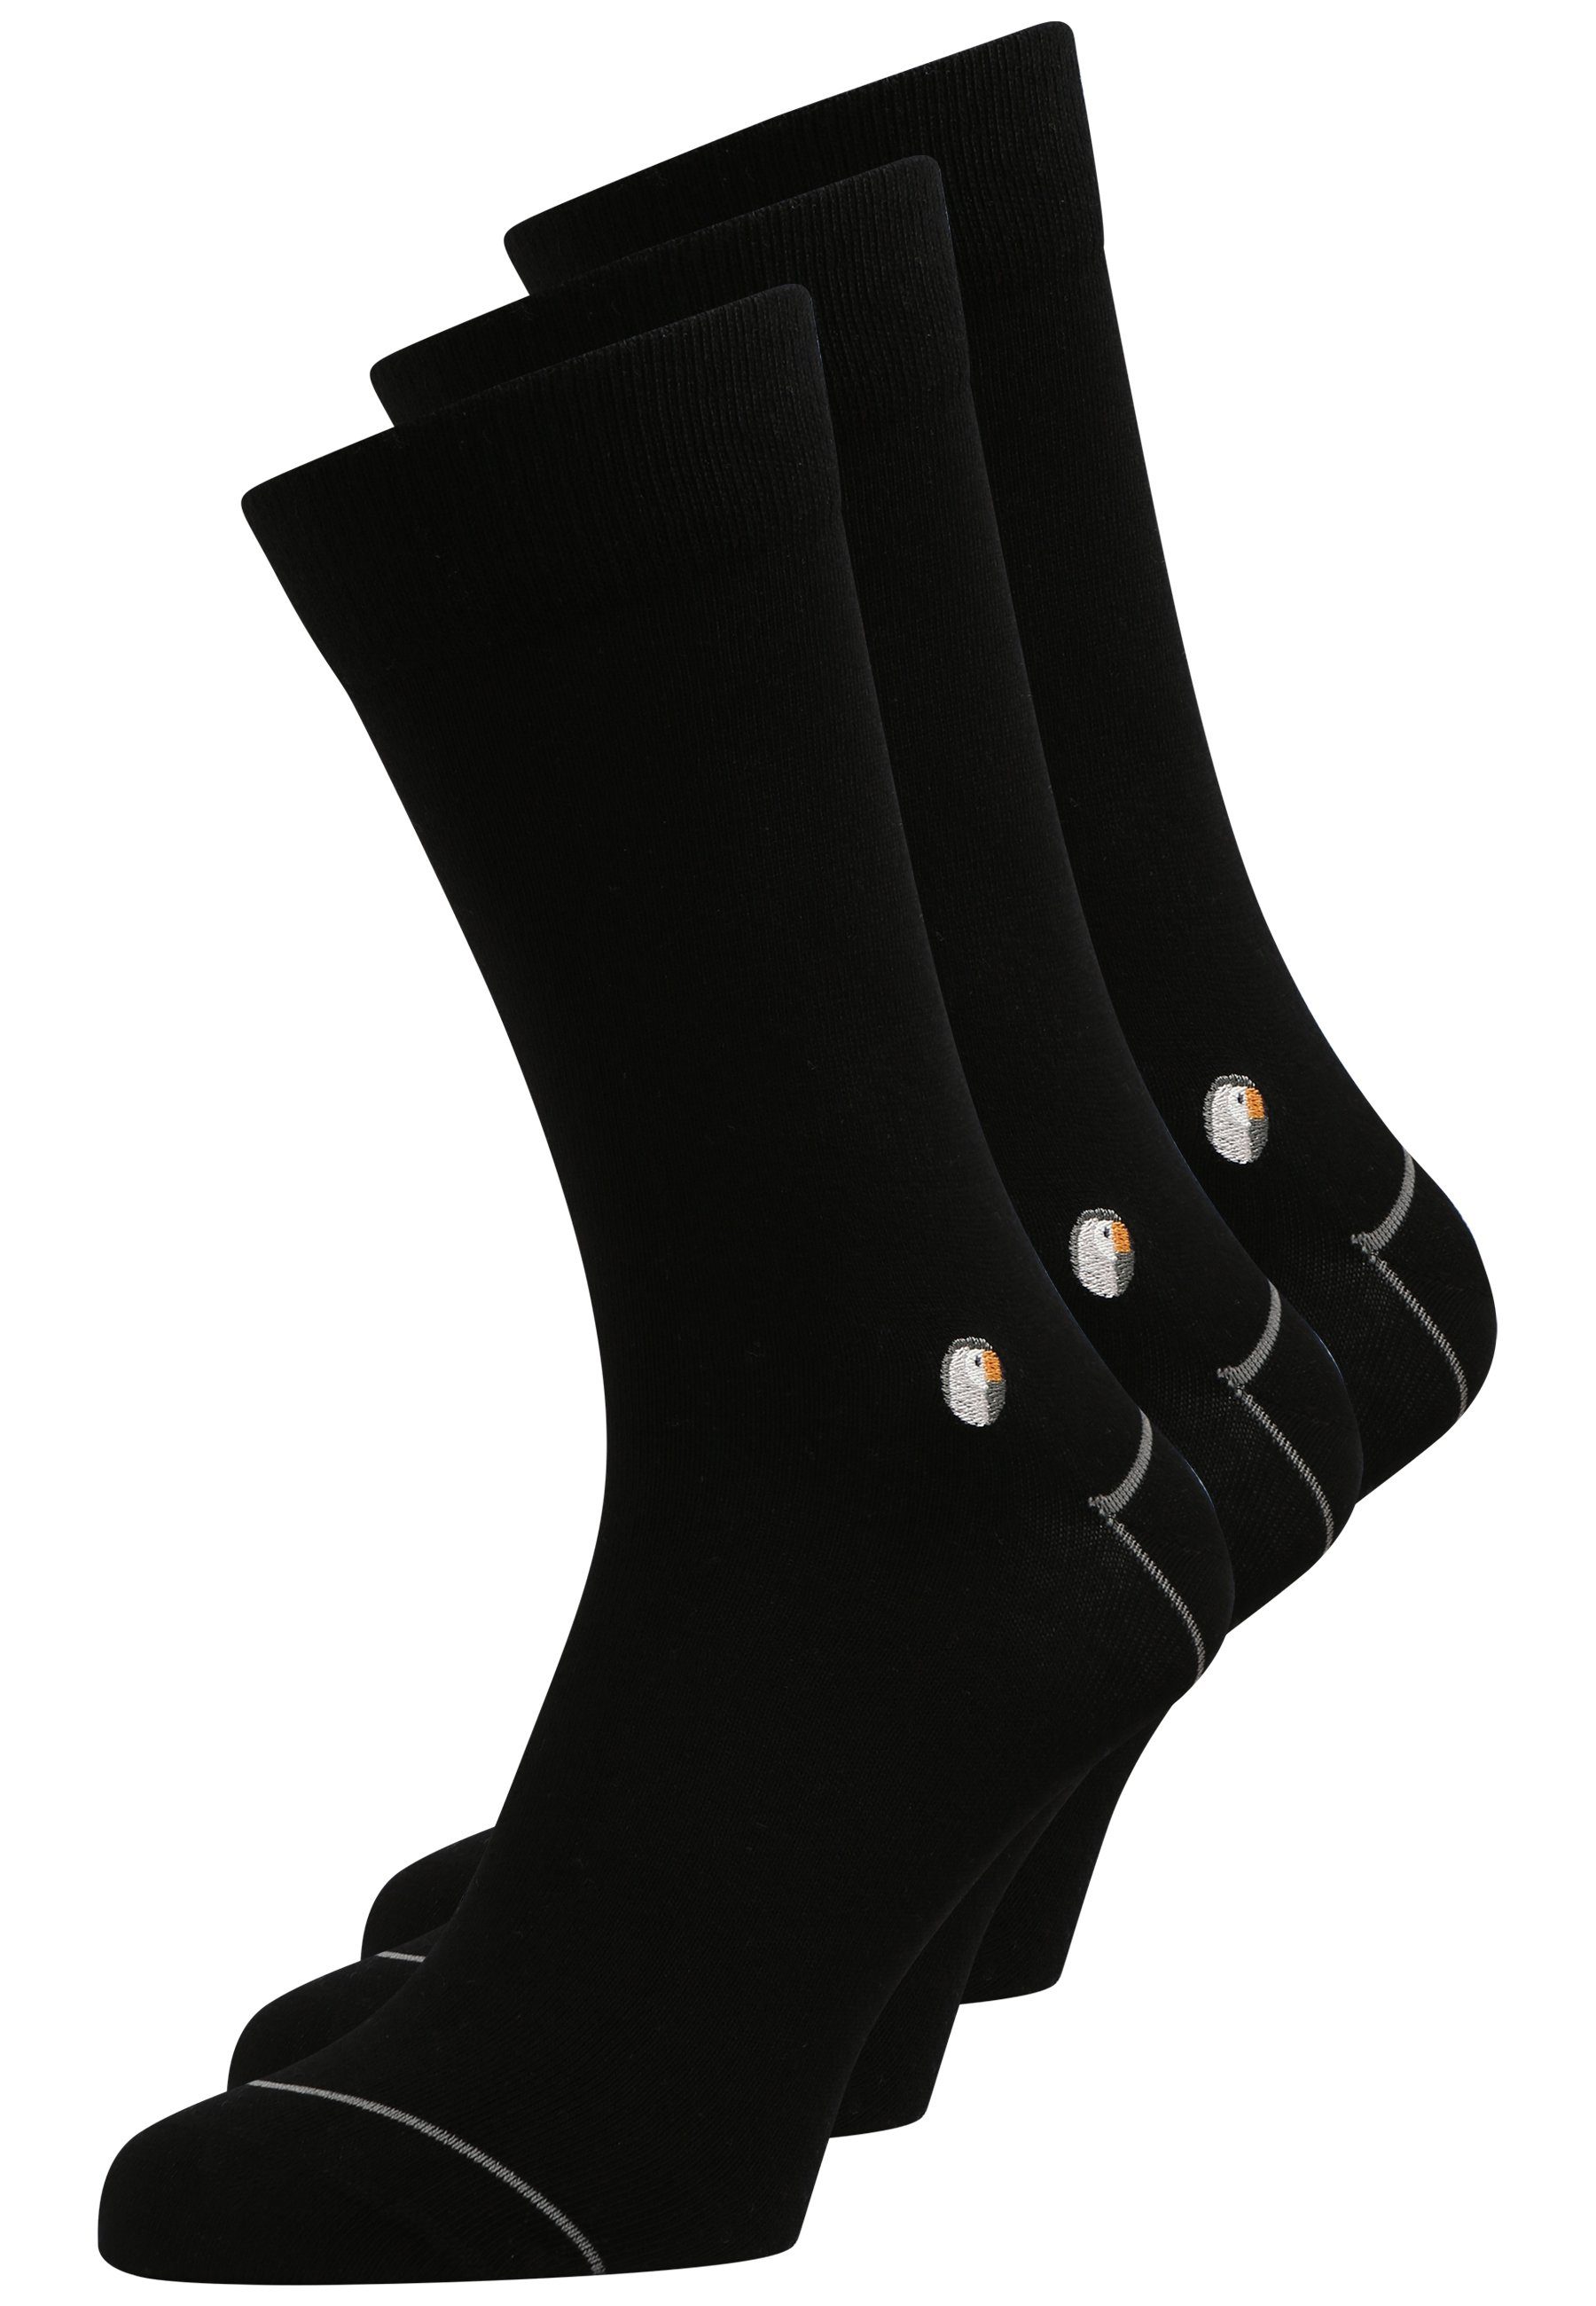 Sokid Socken Set 1 3er Pack (3-Paar) GOTS zertifizierte Bio-Baumwolle